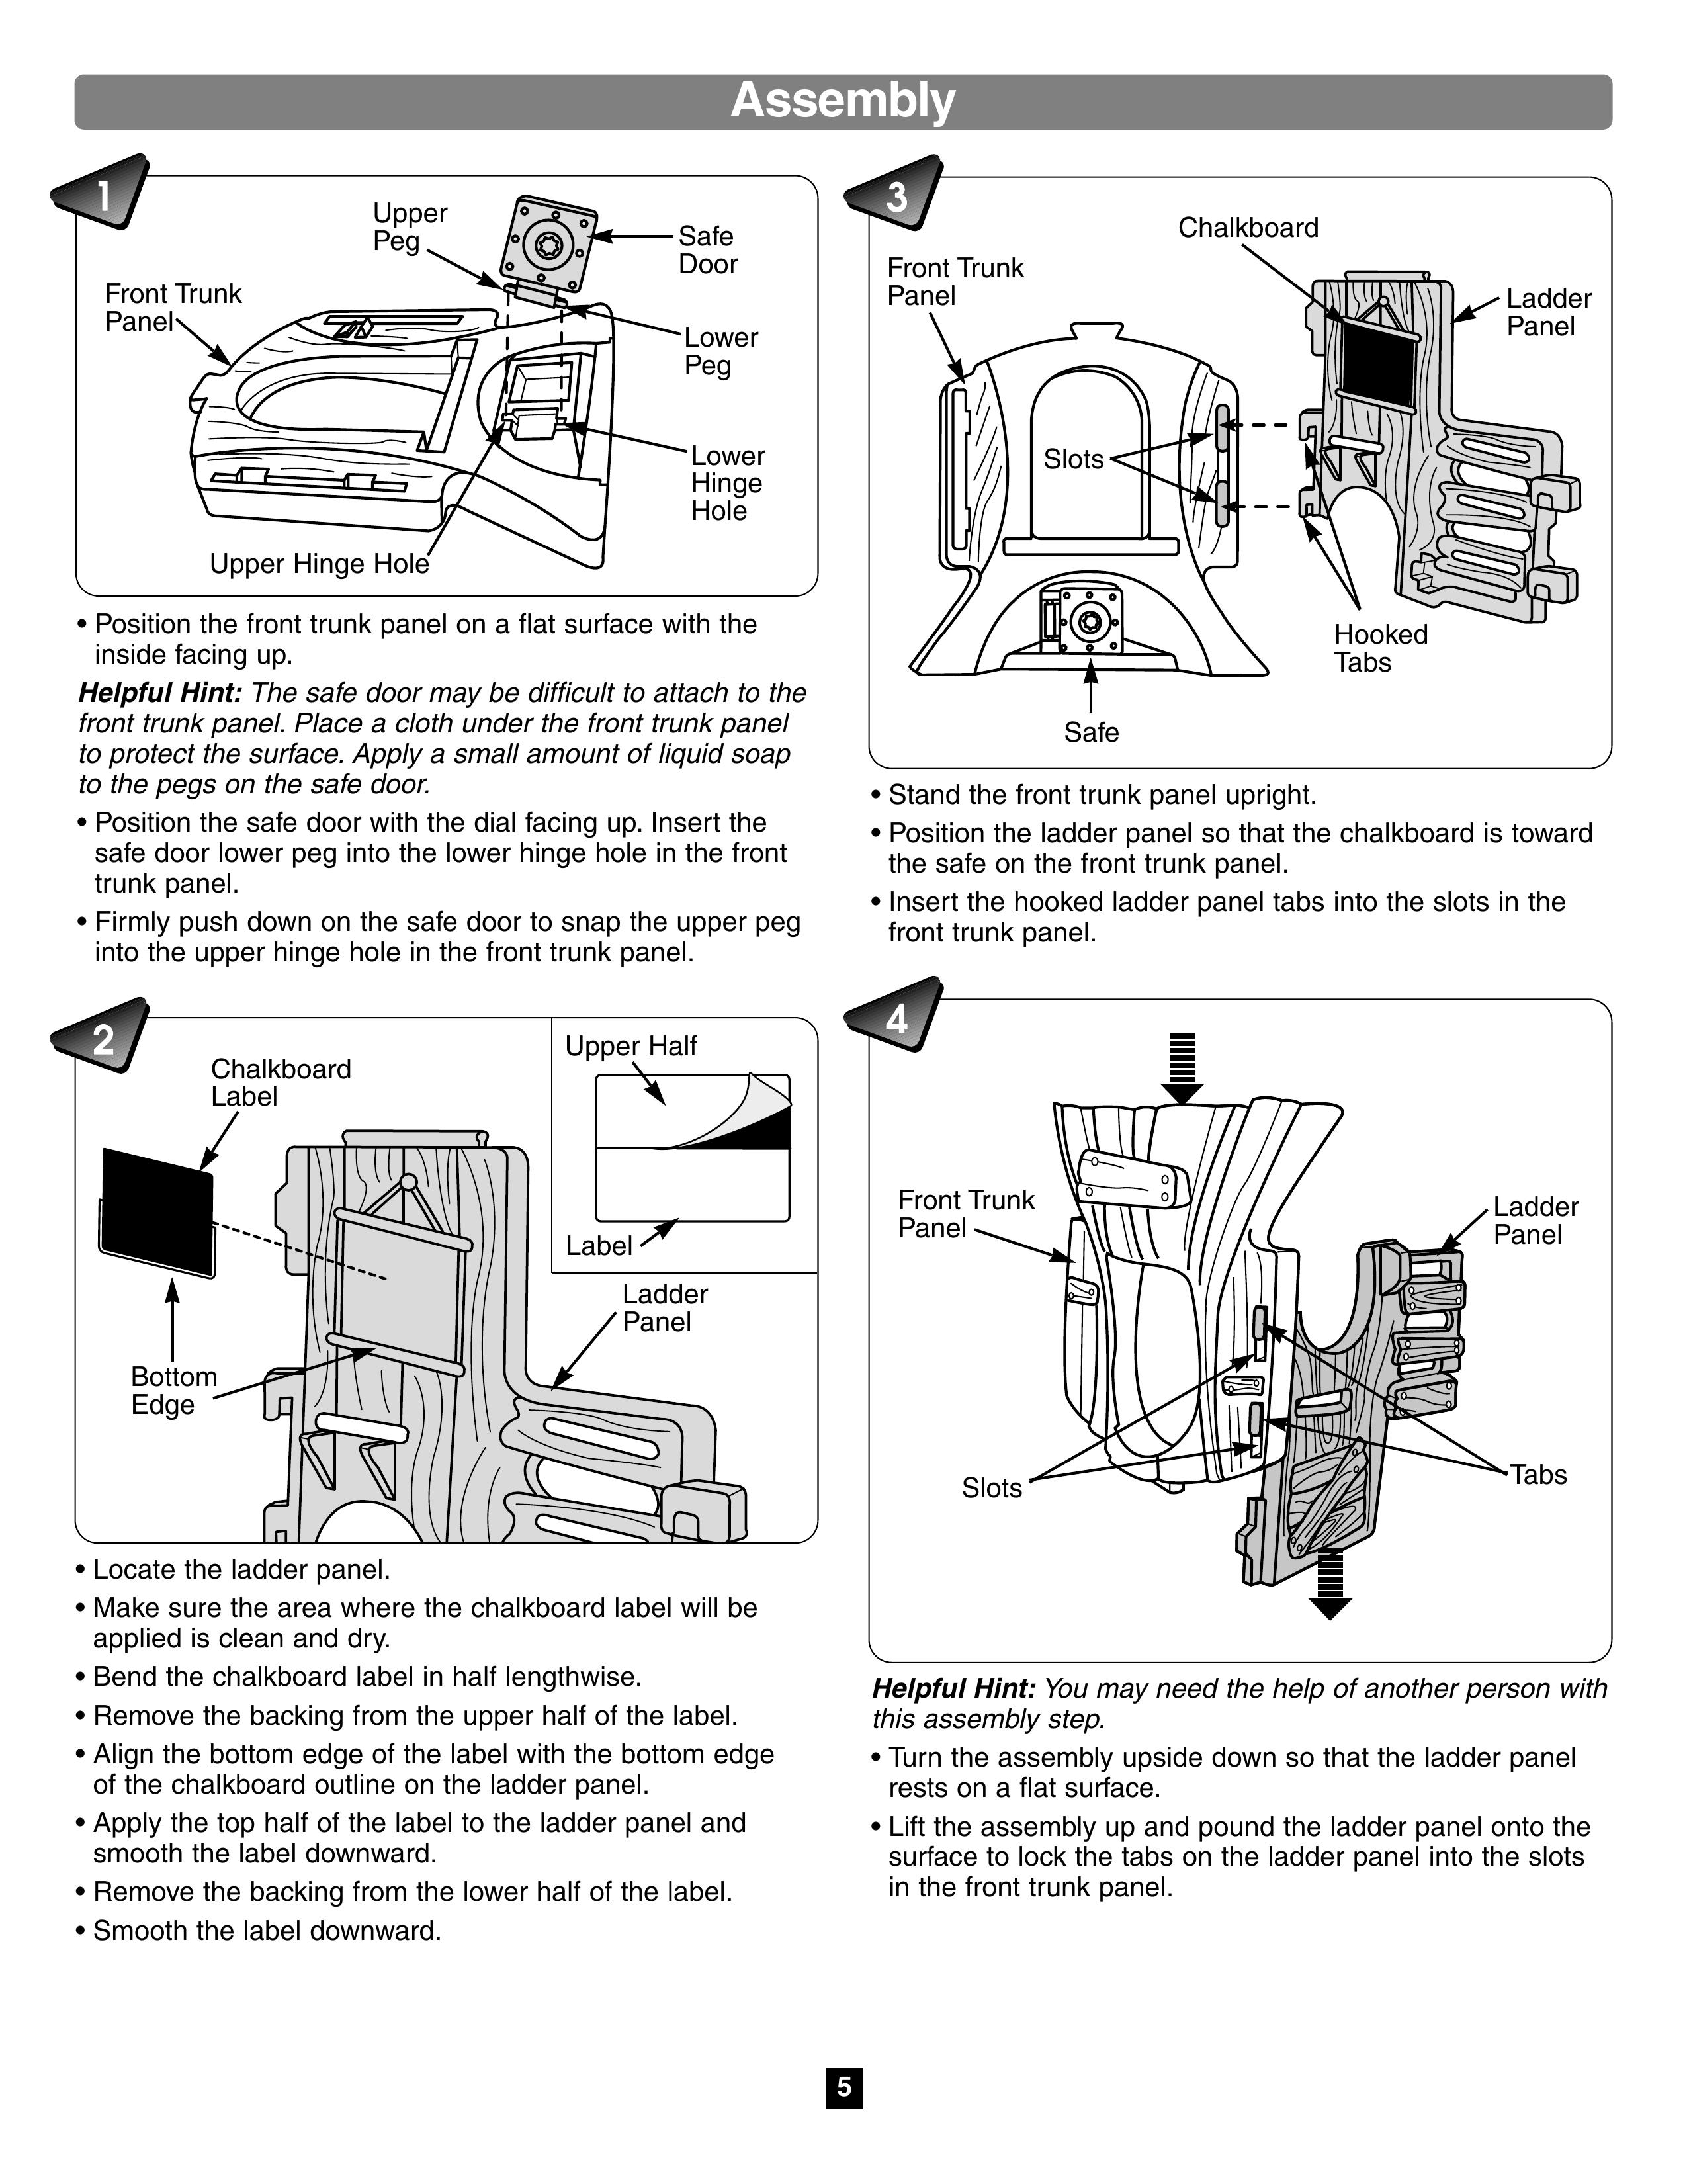 Fisher-Price 75972 Backyard Playset User Manual (Page 5)